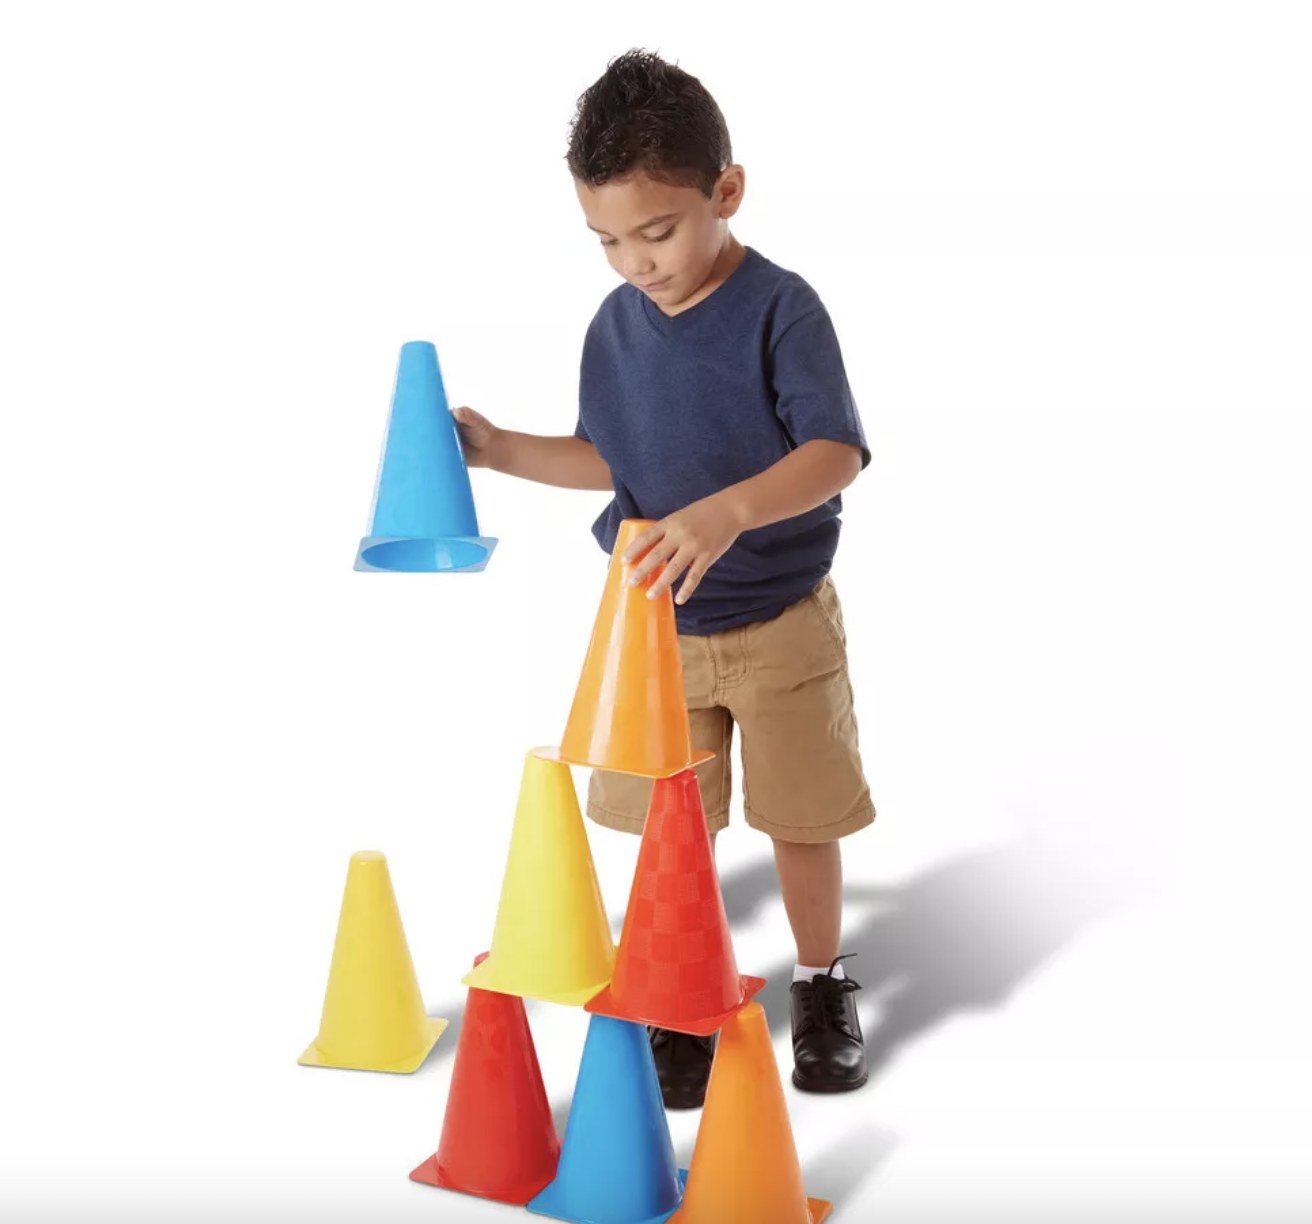 Kid using activity cones